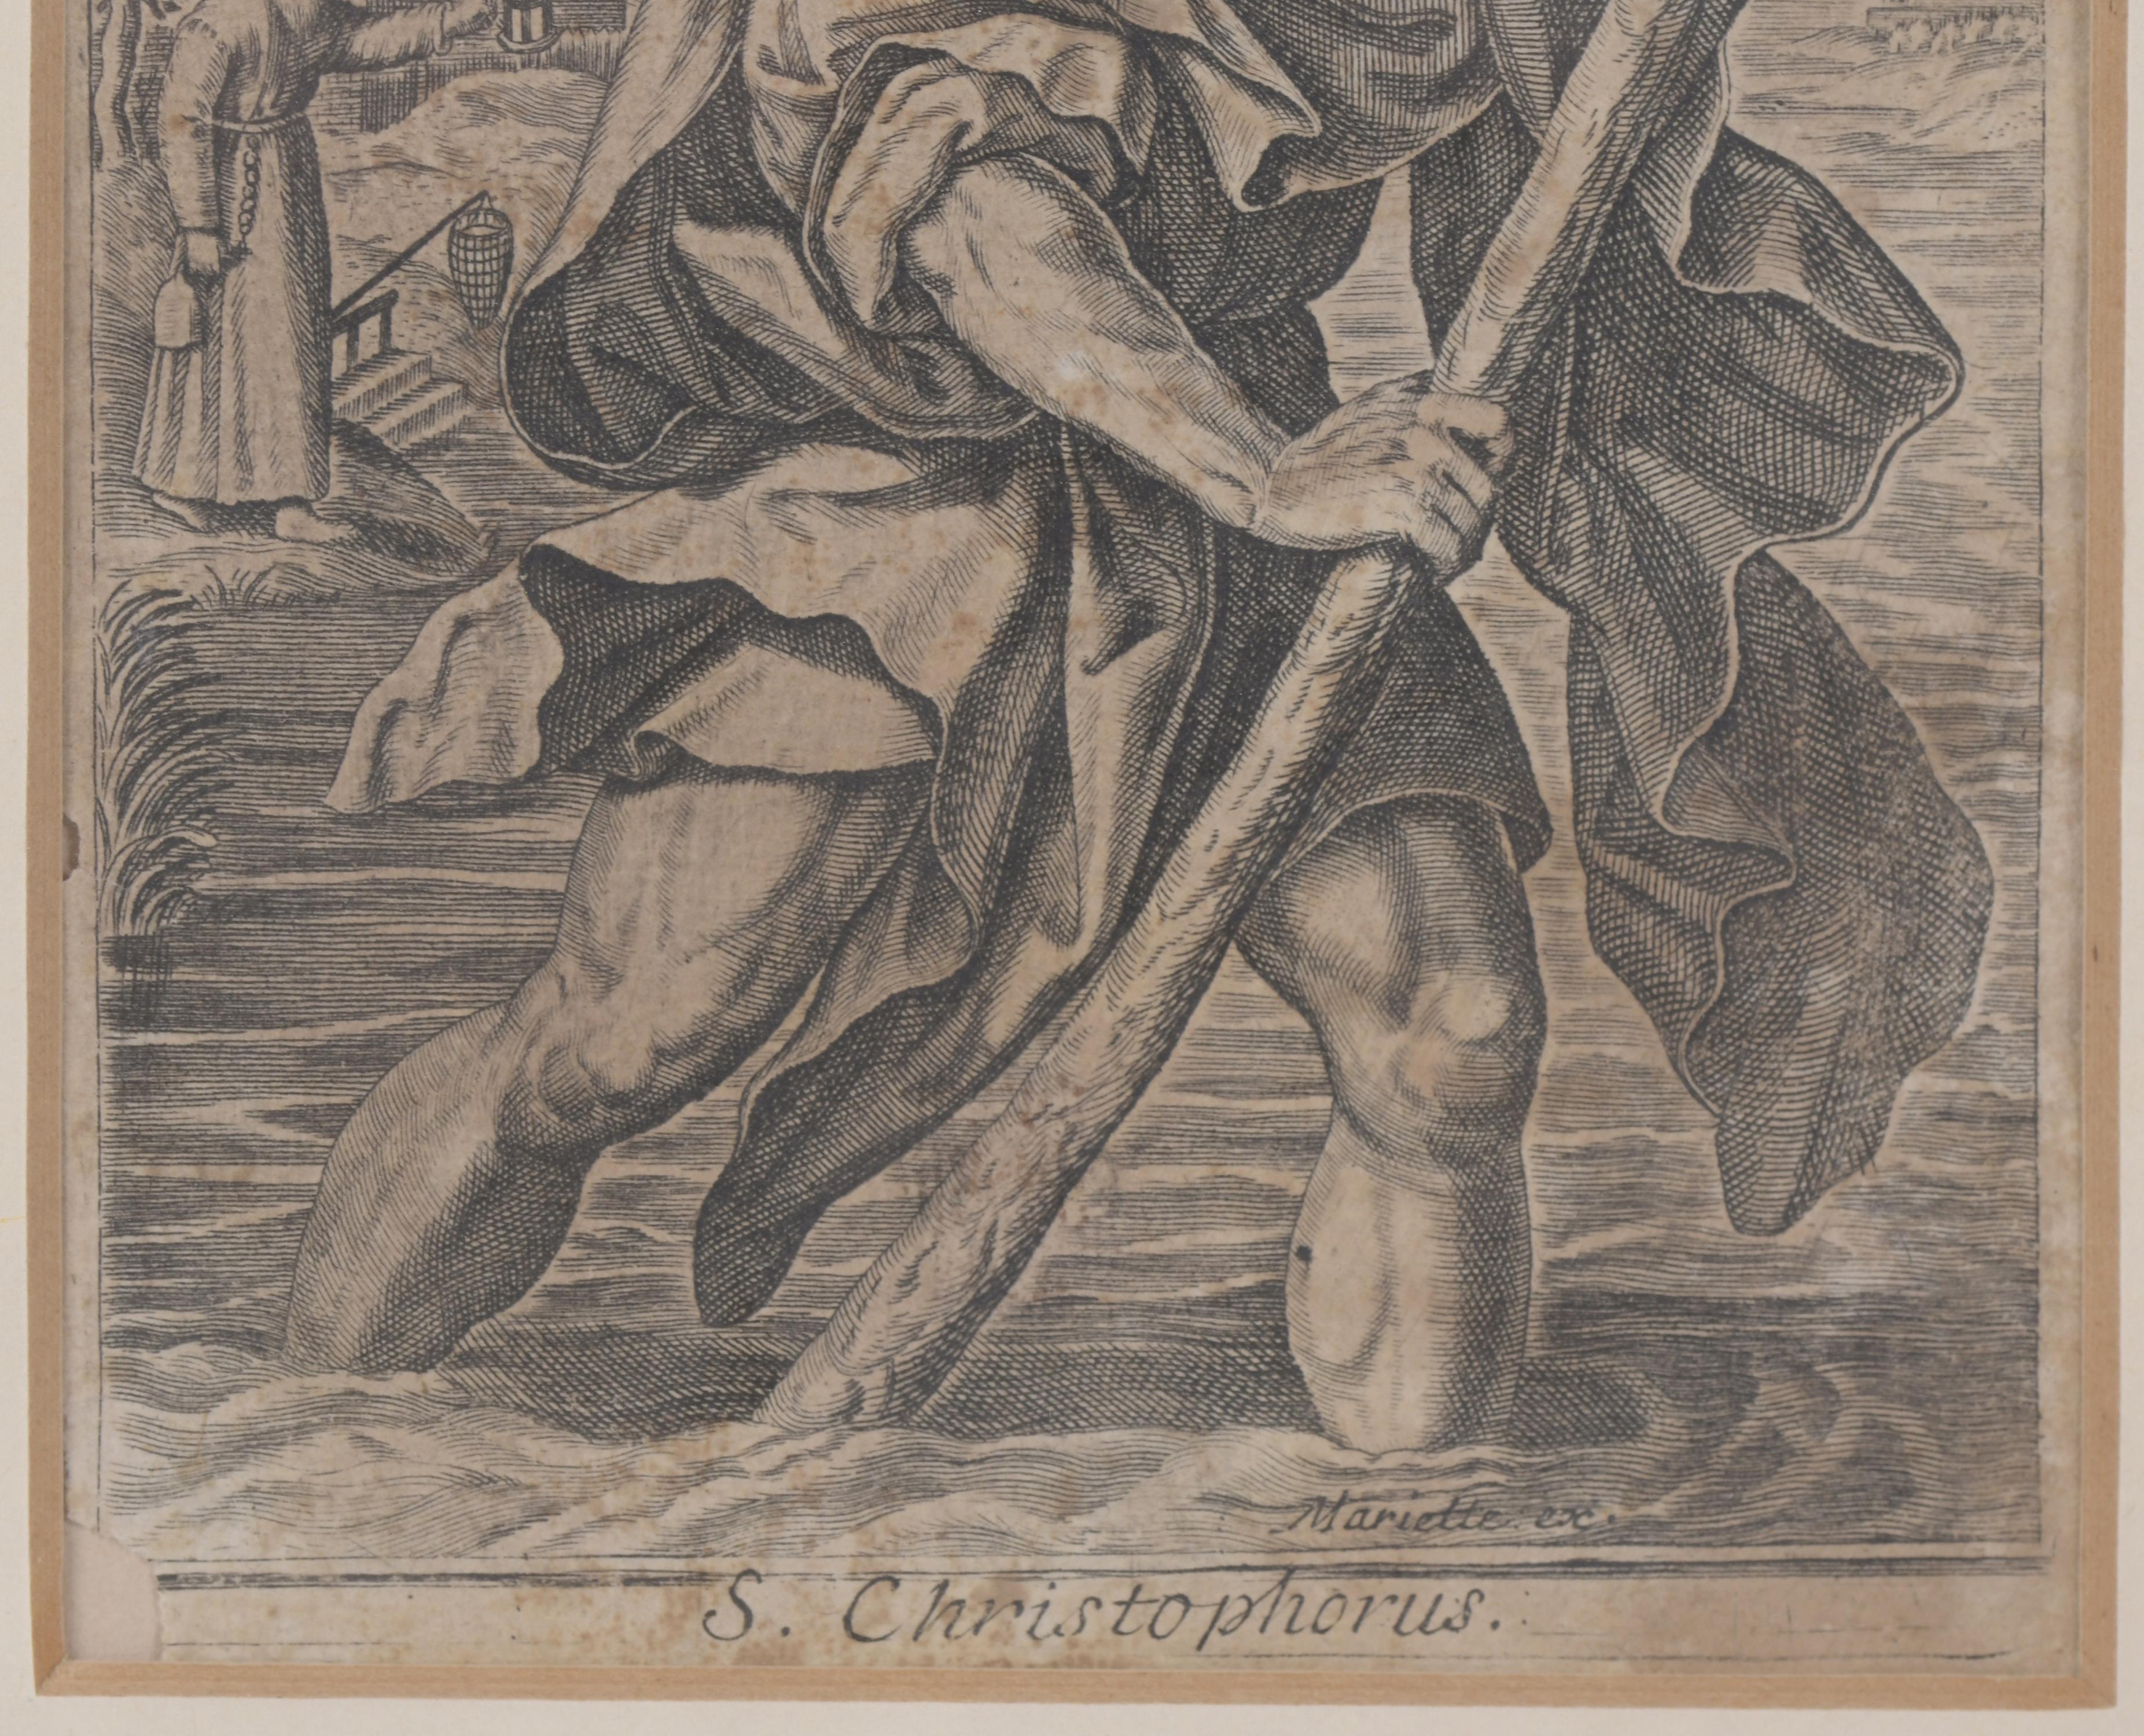 ESCUELA FRANCESA, SIGLO XVIII. "SAN CHRISTOPHORUS".